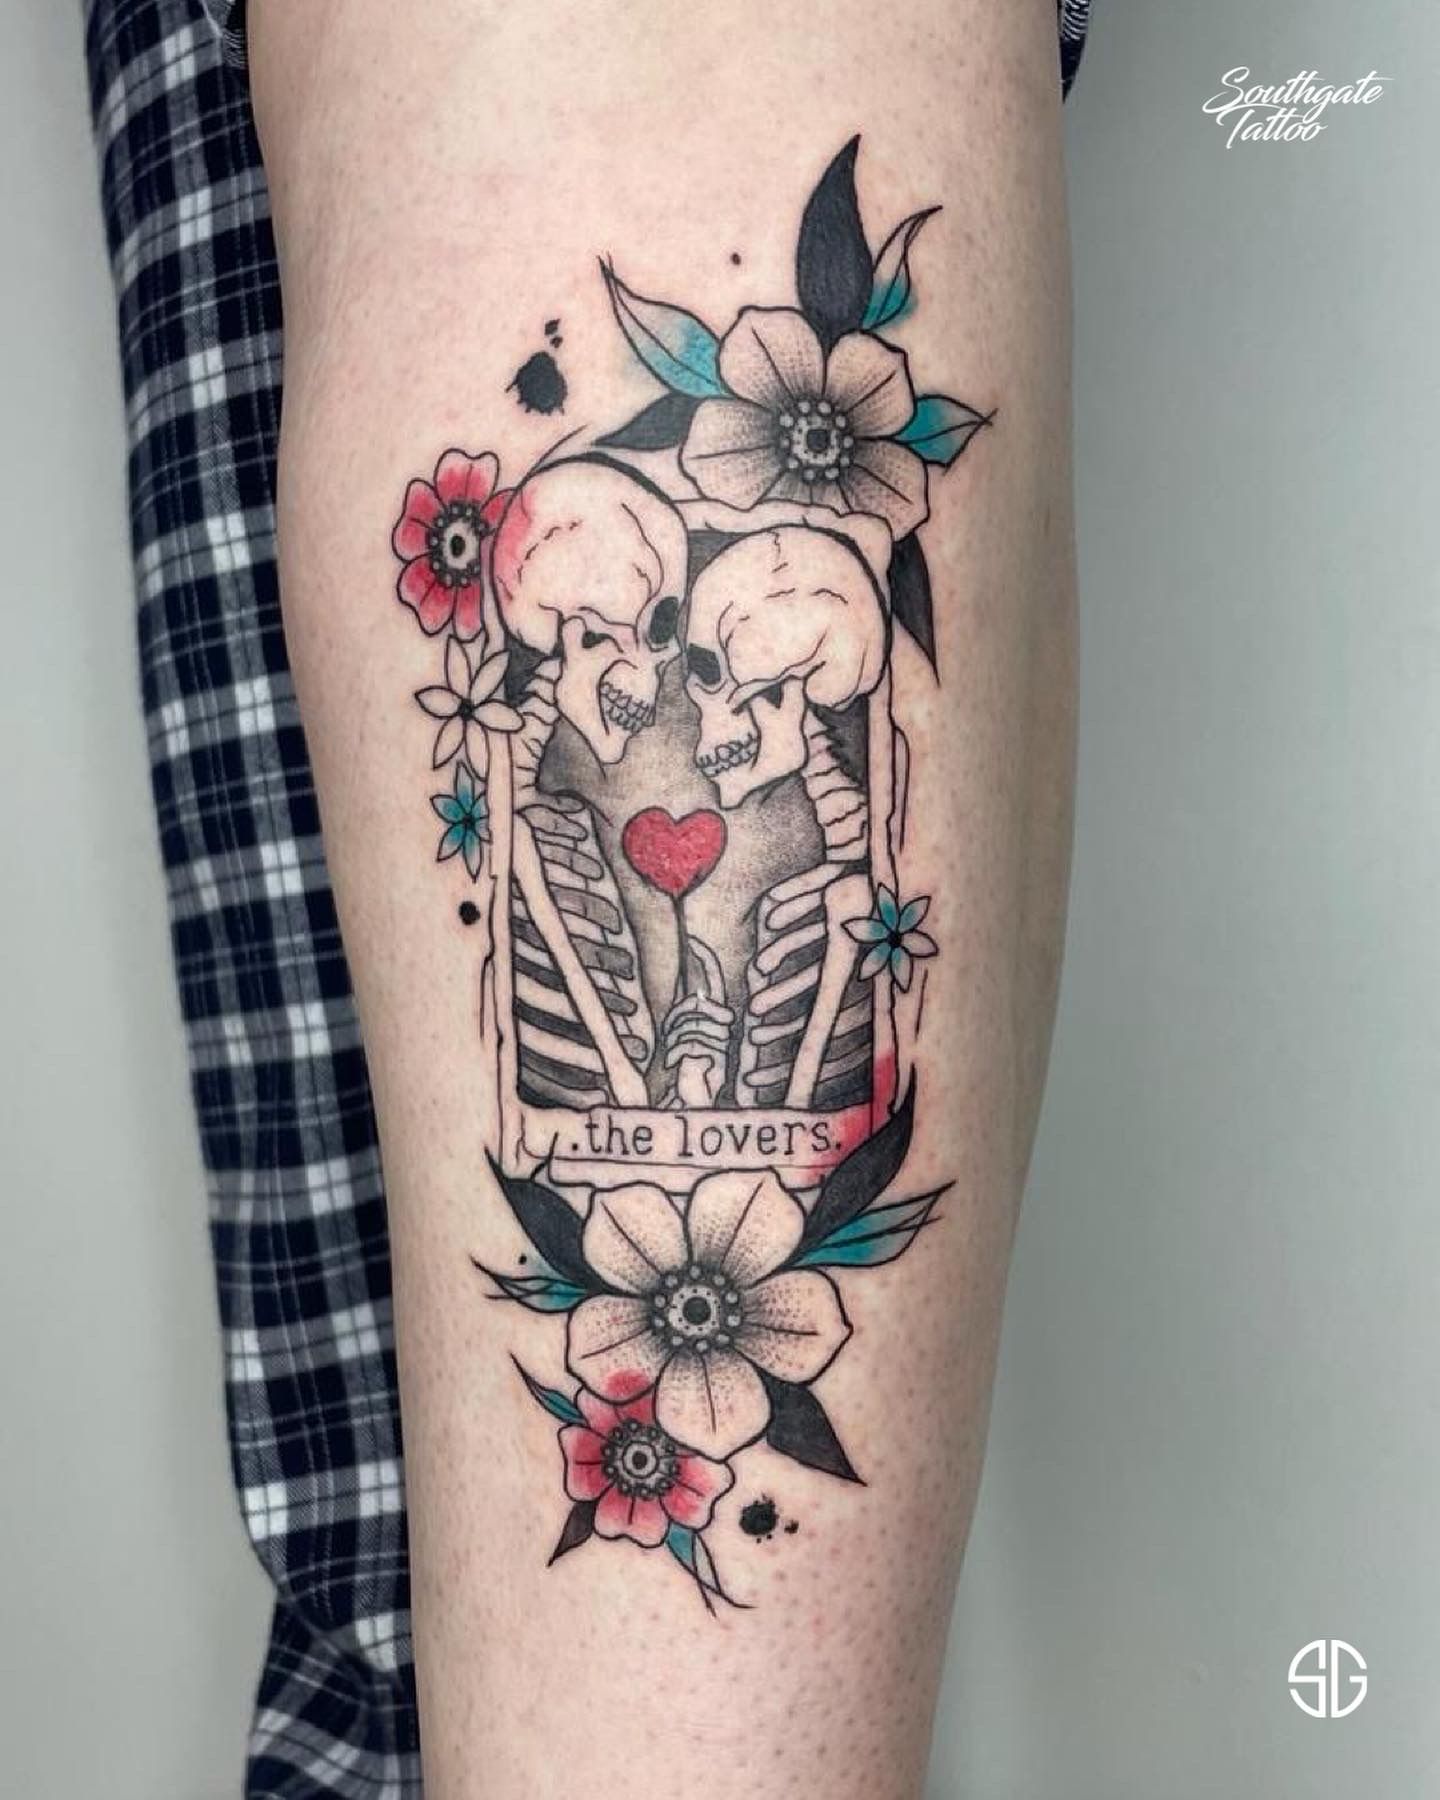 Thumb Roses Couple Tattoo - Best Tattoo Ideas Gallery | Tätowierungen,  Schwestern tattoo, Hand tattoos